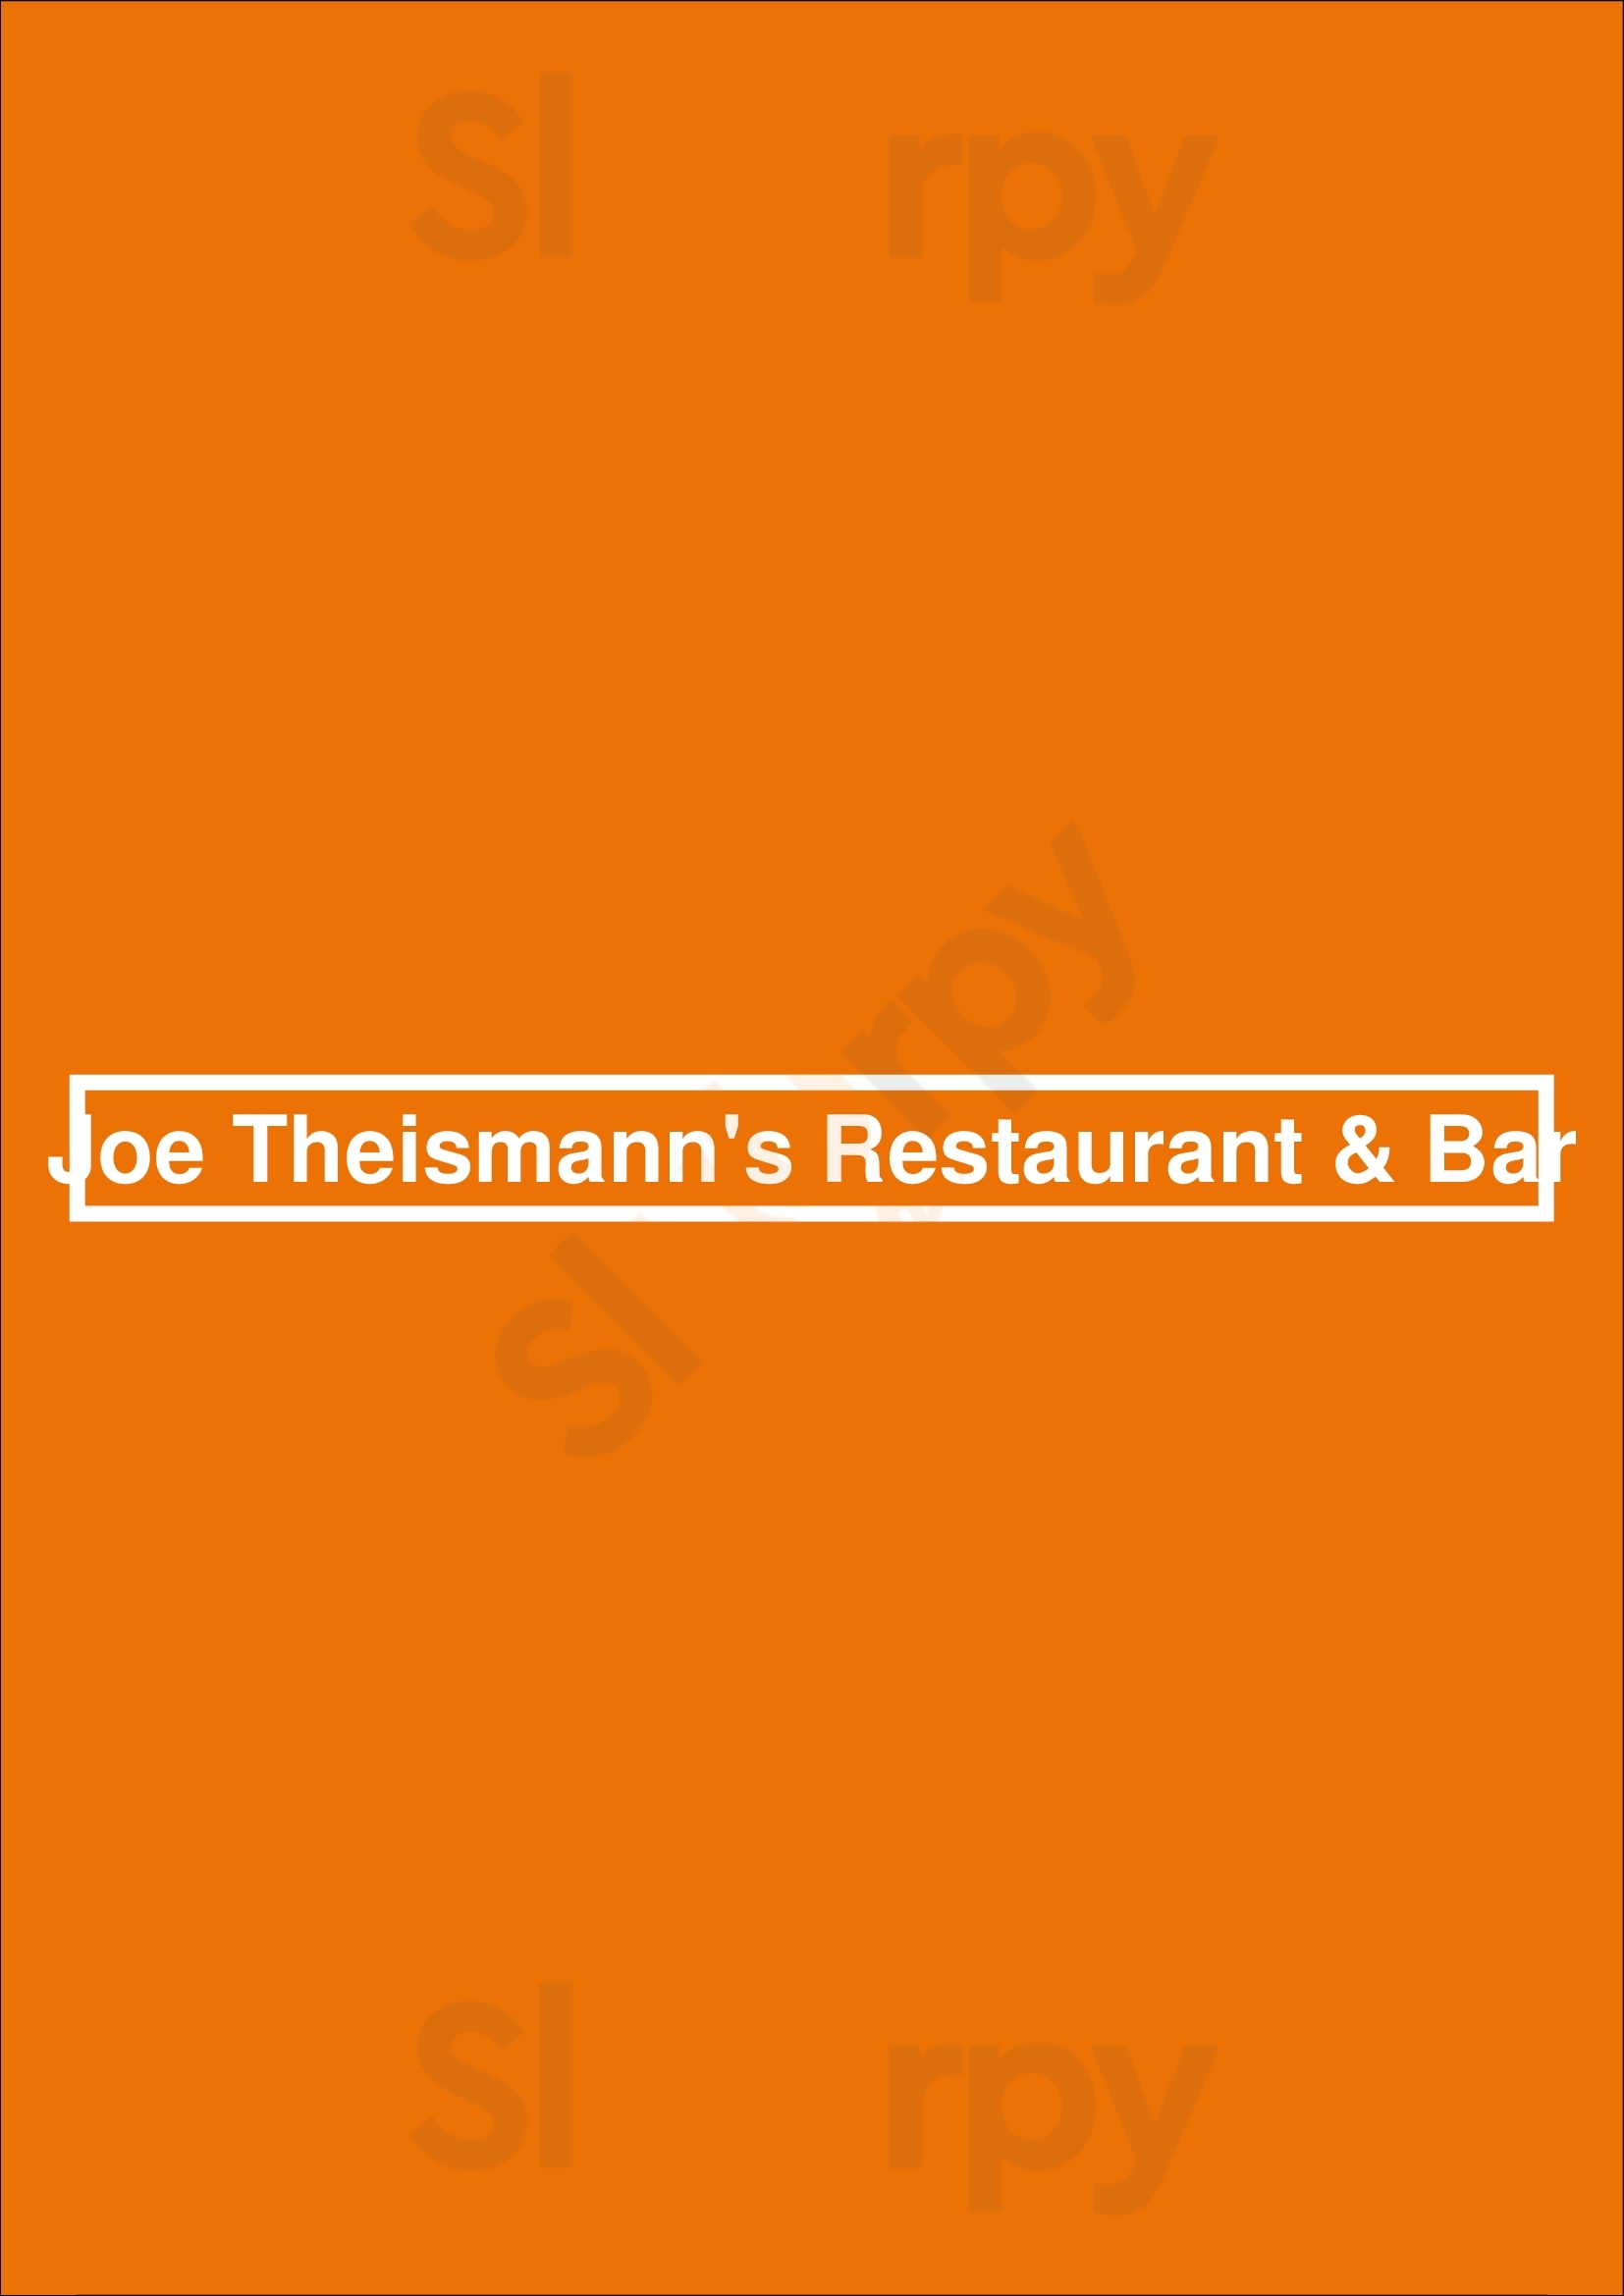 Joe Theismann's Restaurant Alexandria Menu - 1